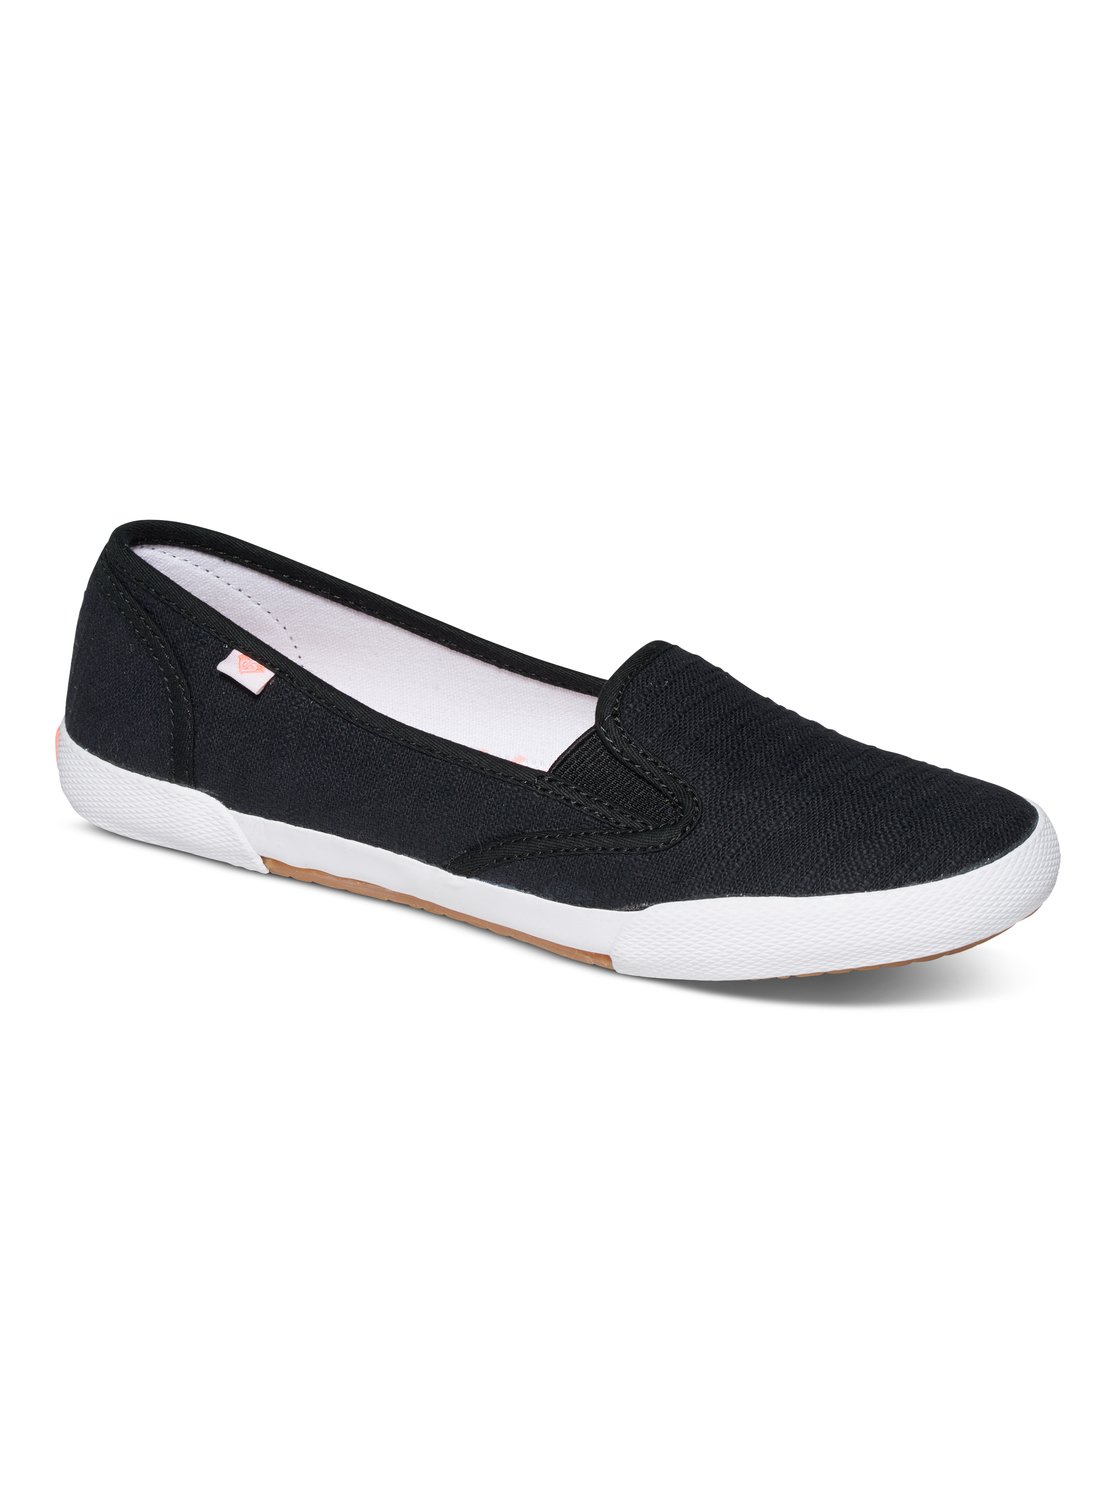 Malibu Slip-On Shoes ARJS300229 | Roxy